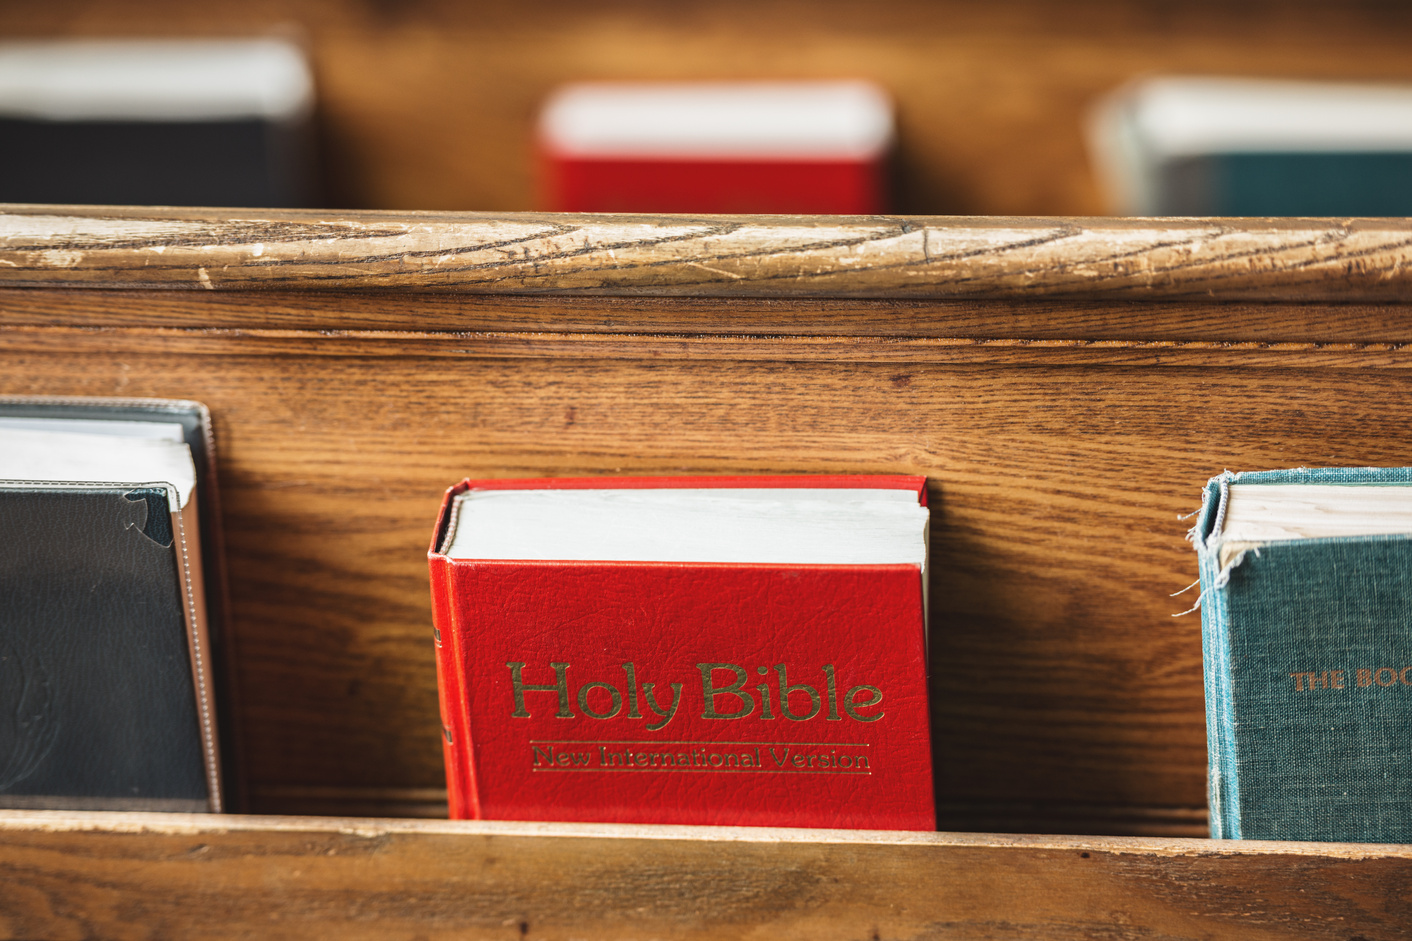 Church pew bibles